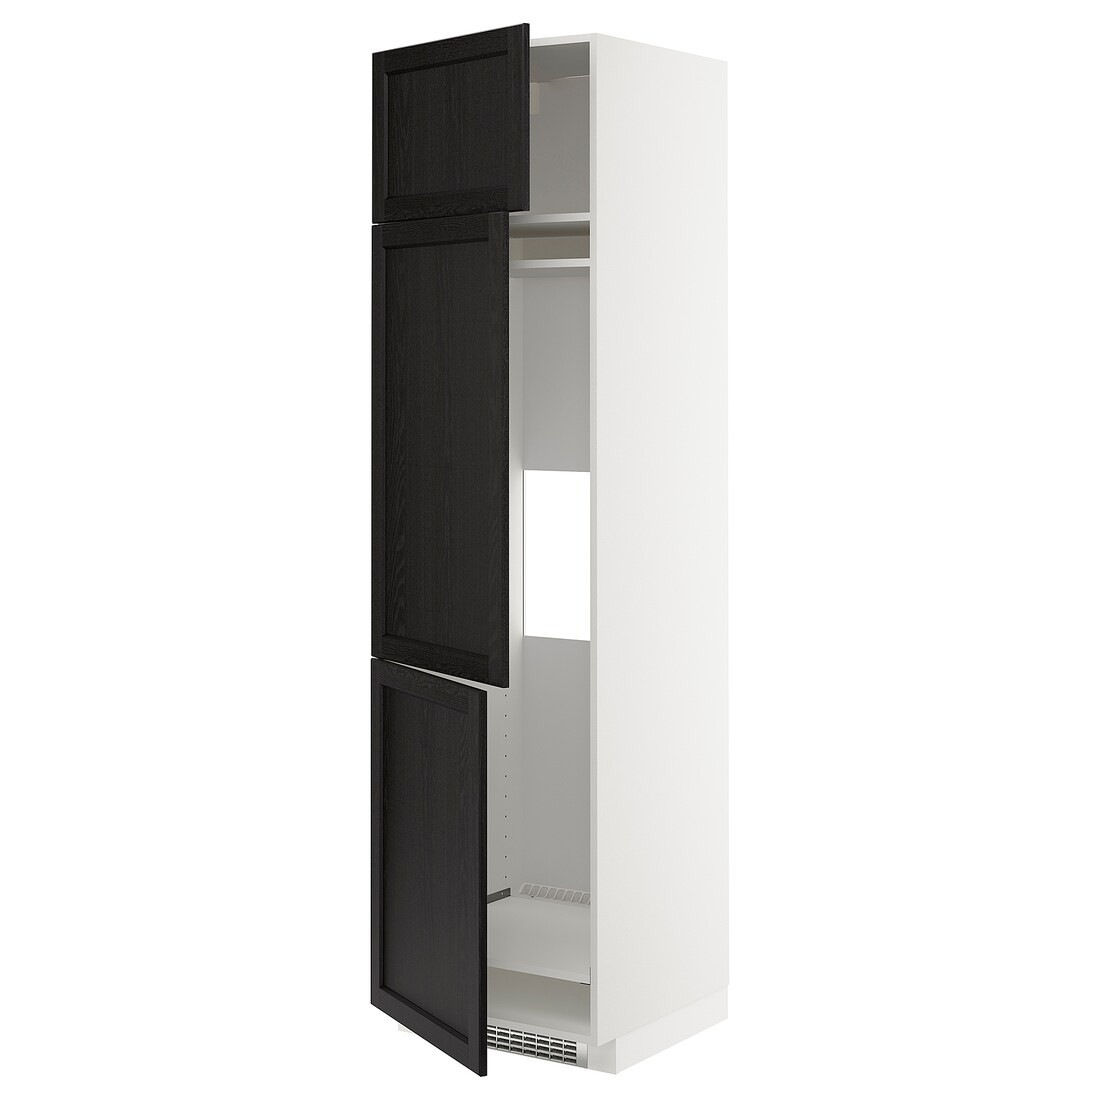 IKEA METOD МЕТОД Высокий шкаф для холодильника / морозильника / 3 дверцы, белый / Lerhyttan черная морилка, 60x60x220 см 89466420 | 894.664.20